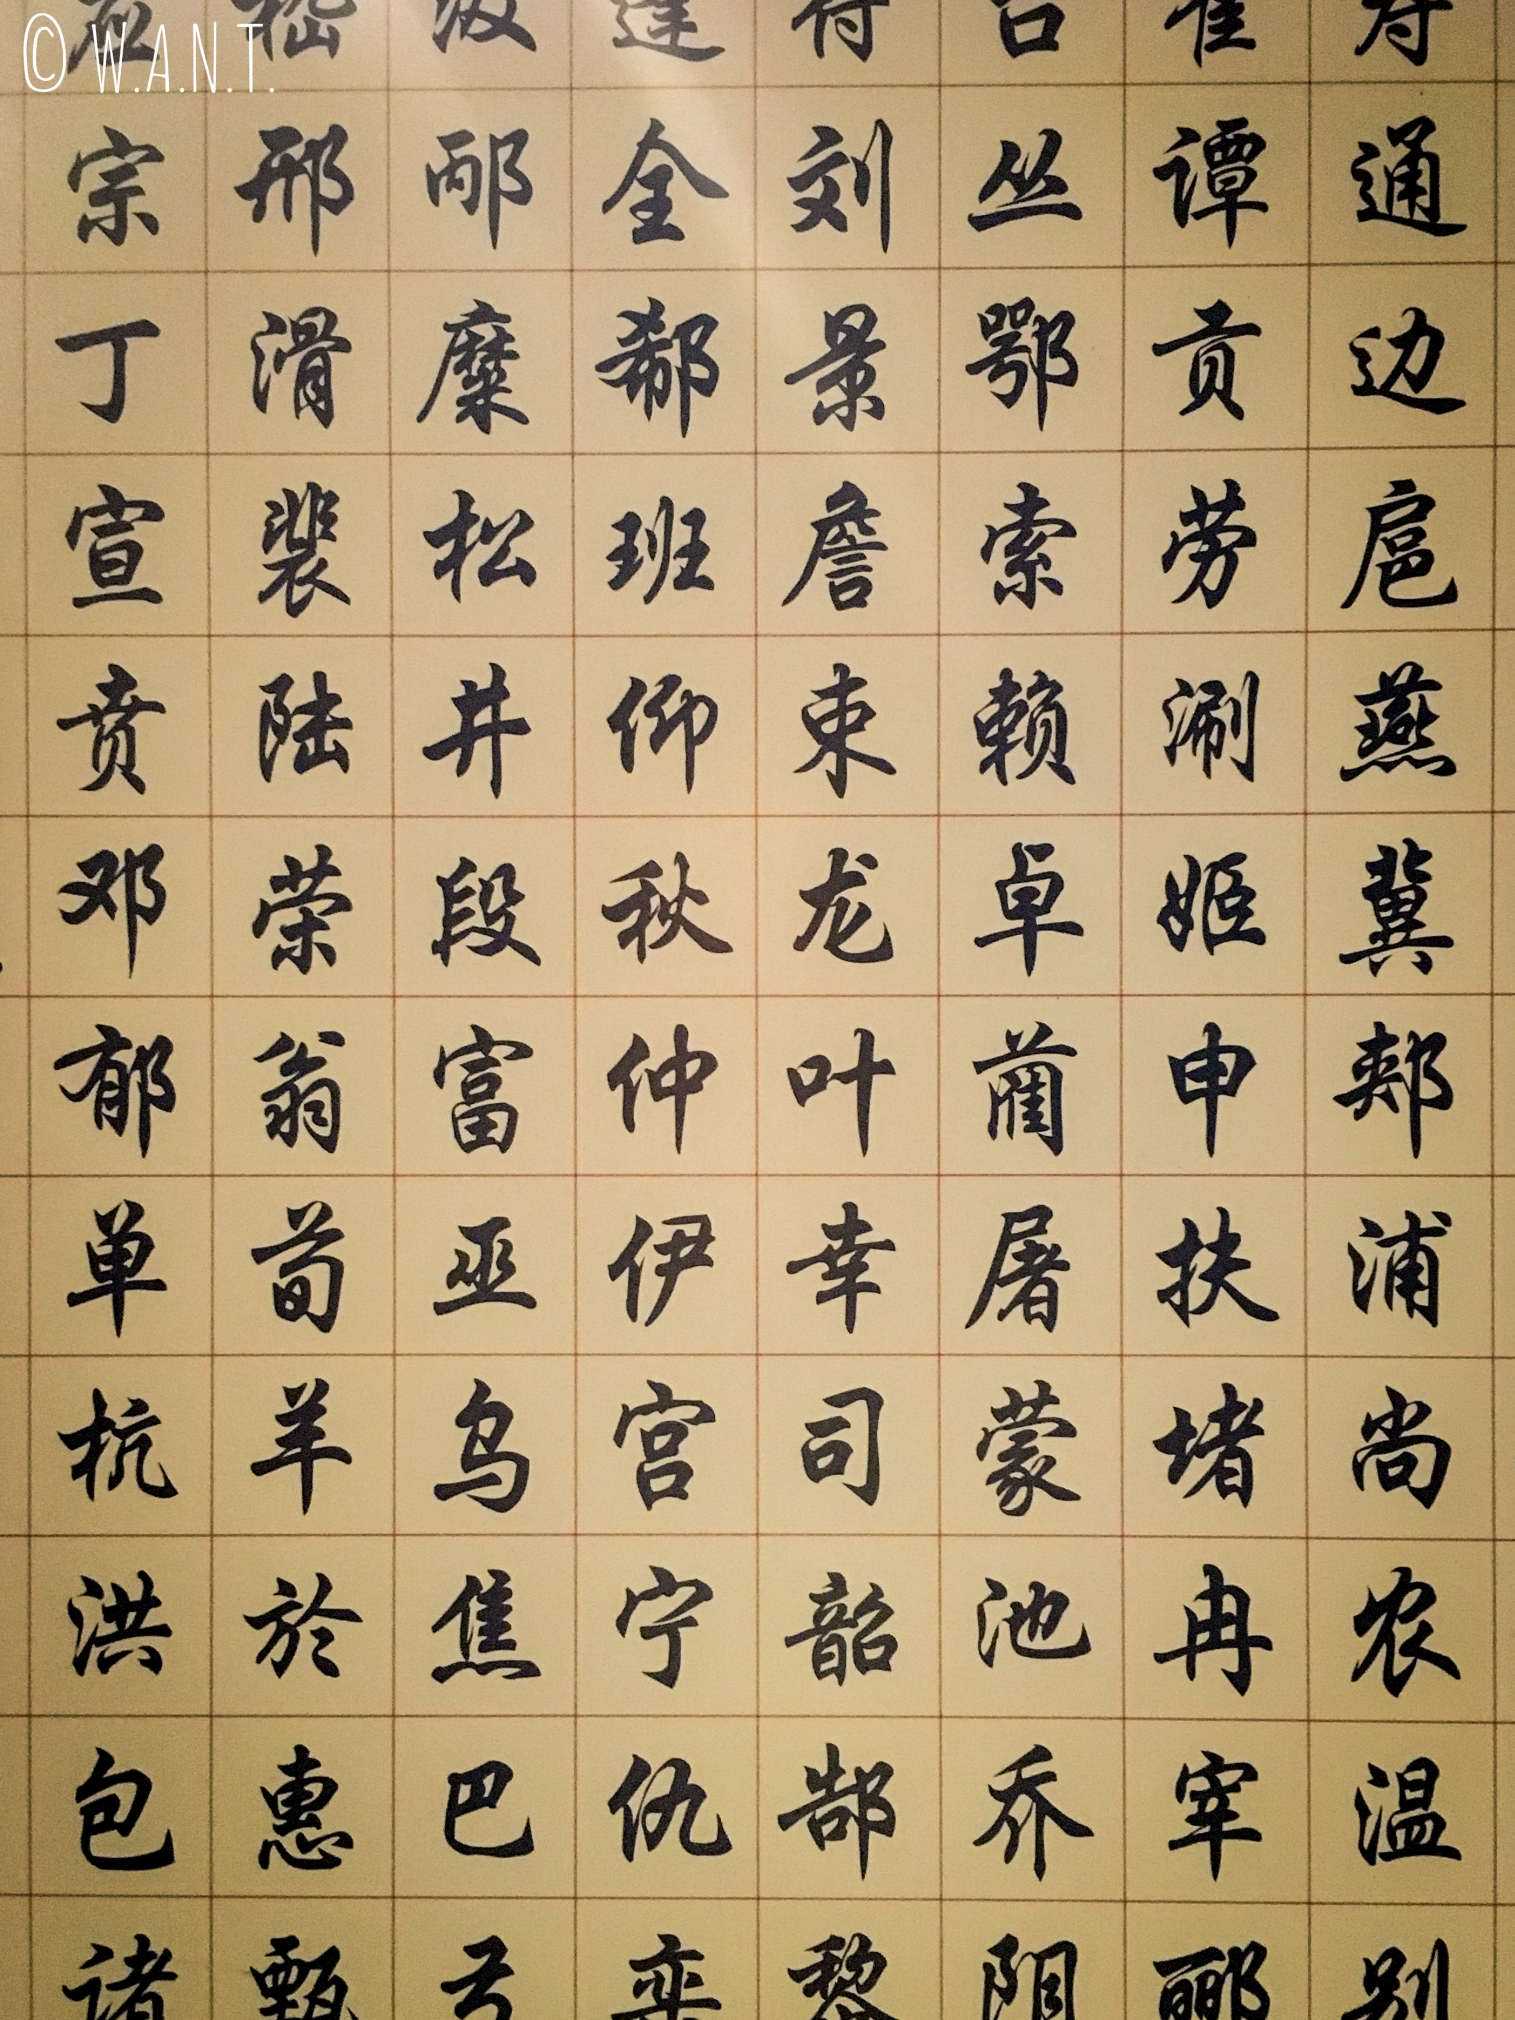 Graphisme chinois au Chinese History Museum de Kuching